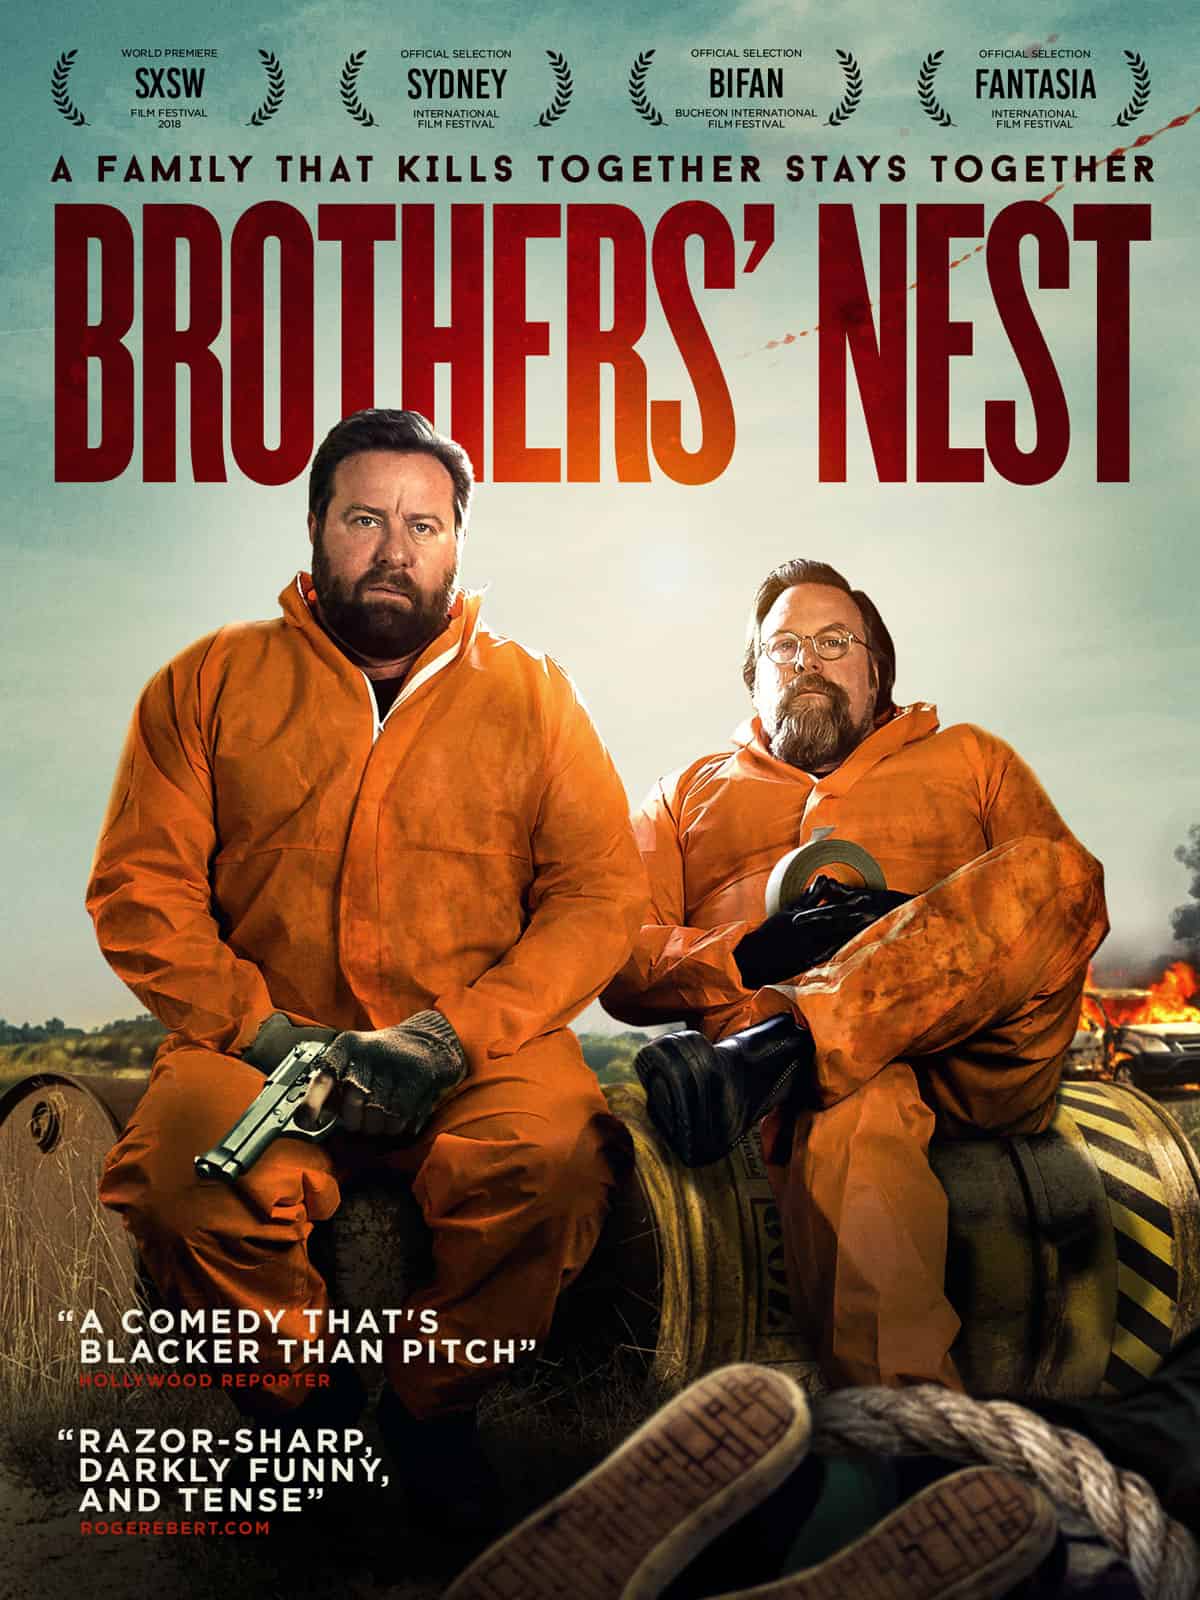 Brothers Nest